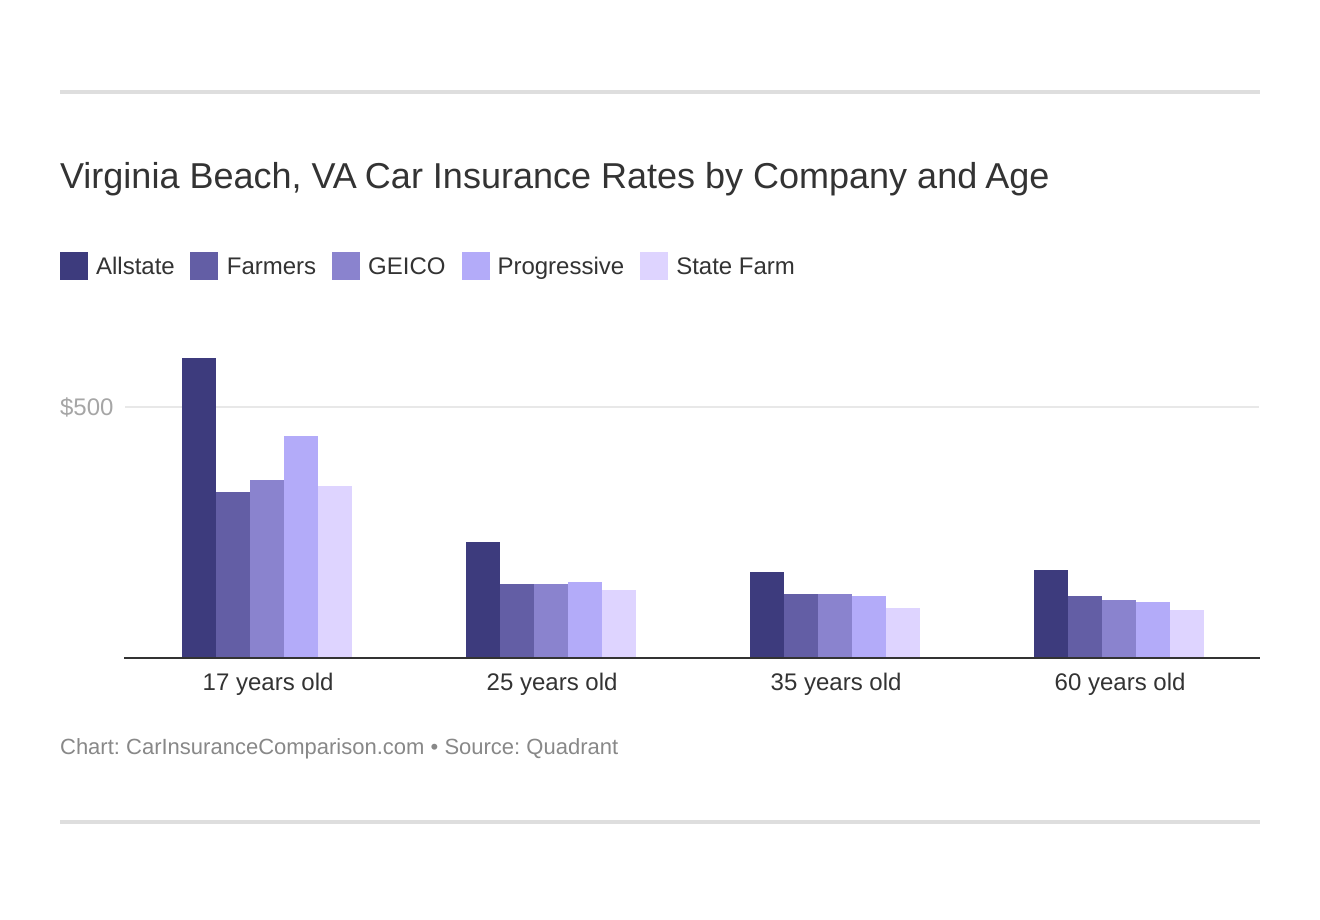 Virginia Beach, VA Car Insurance Rates by Company and Age